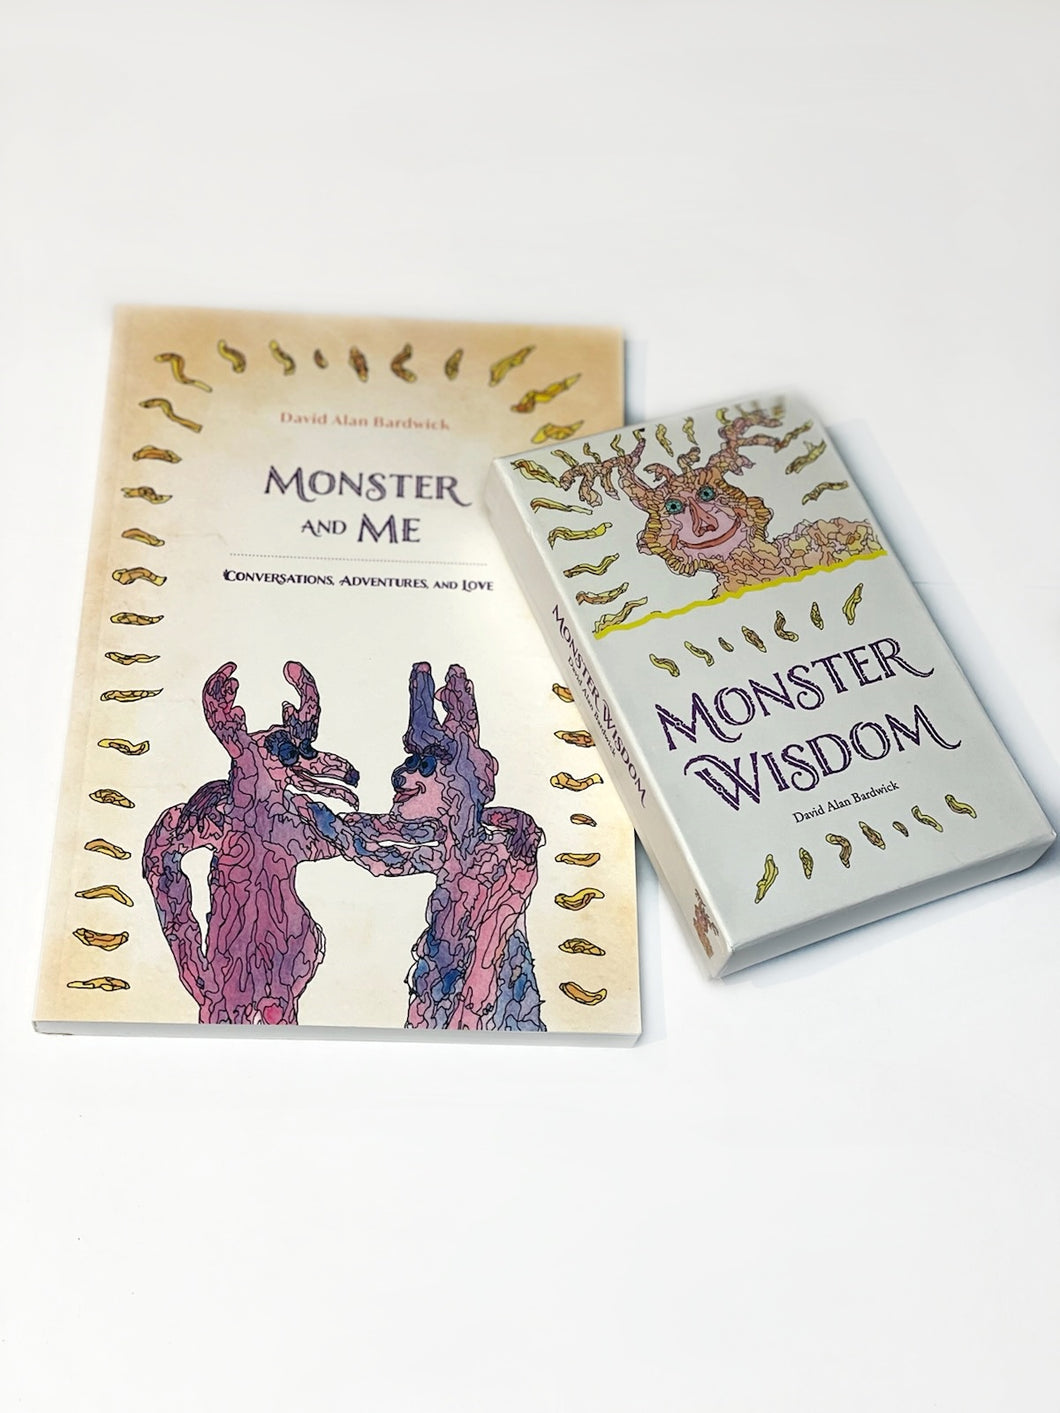 Monster bundle (book + wisdom deck)